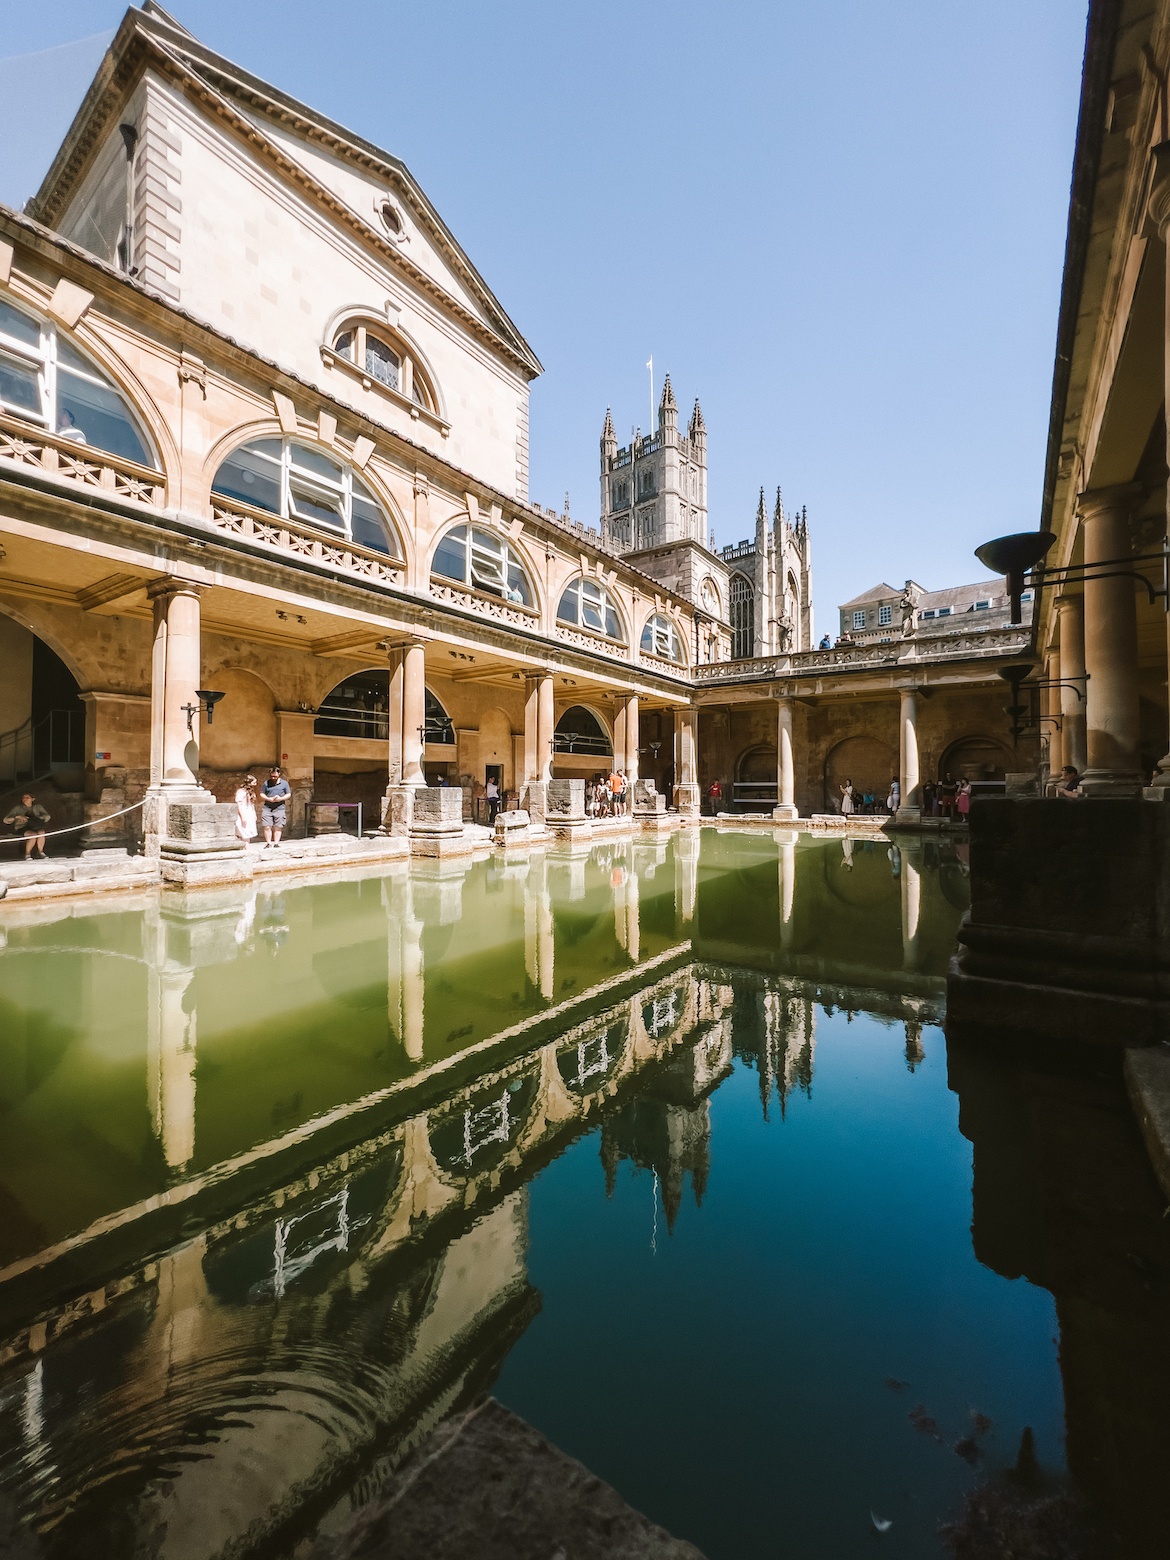 The Roman Baths in Bath, UK